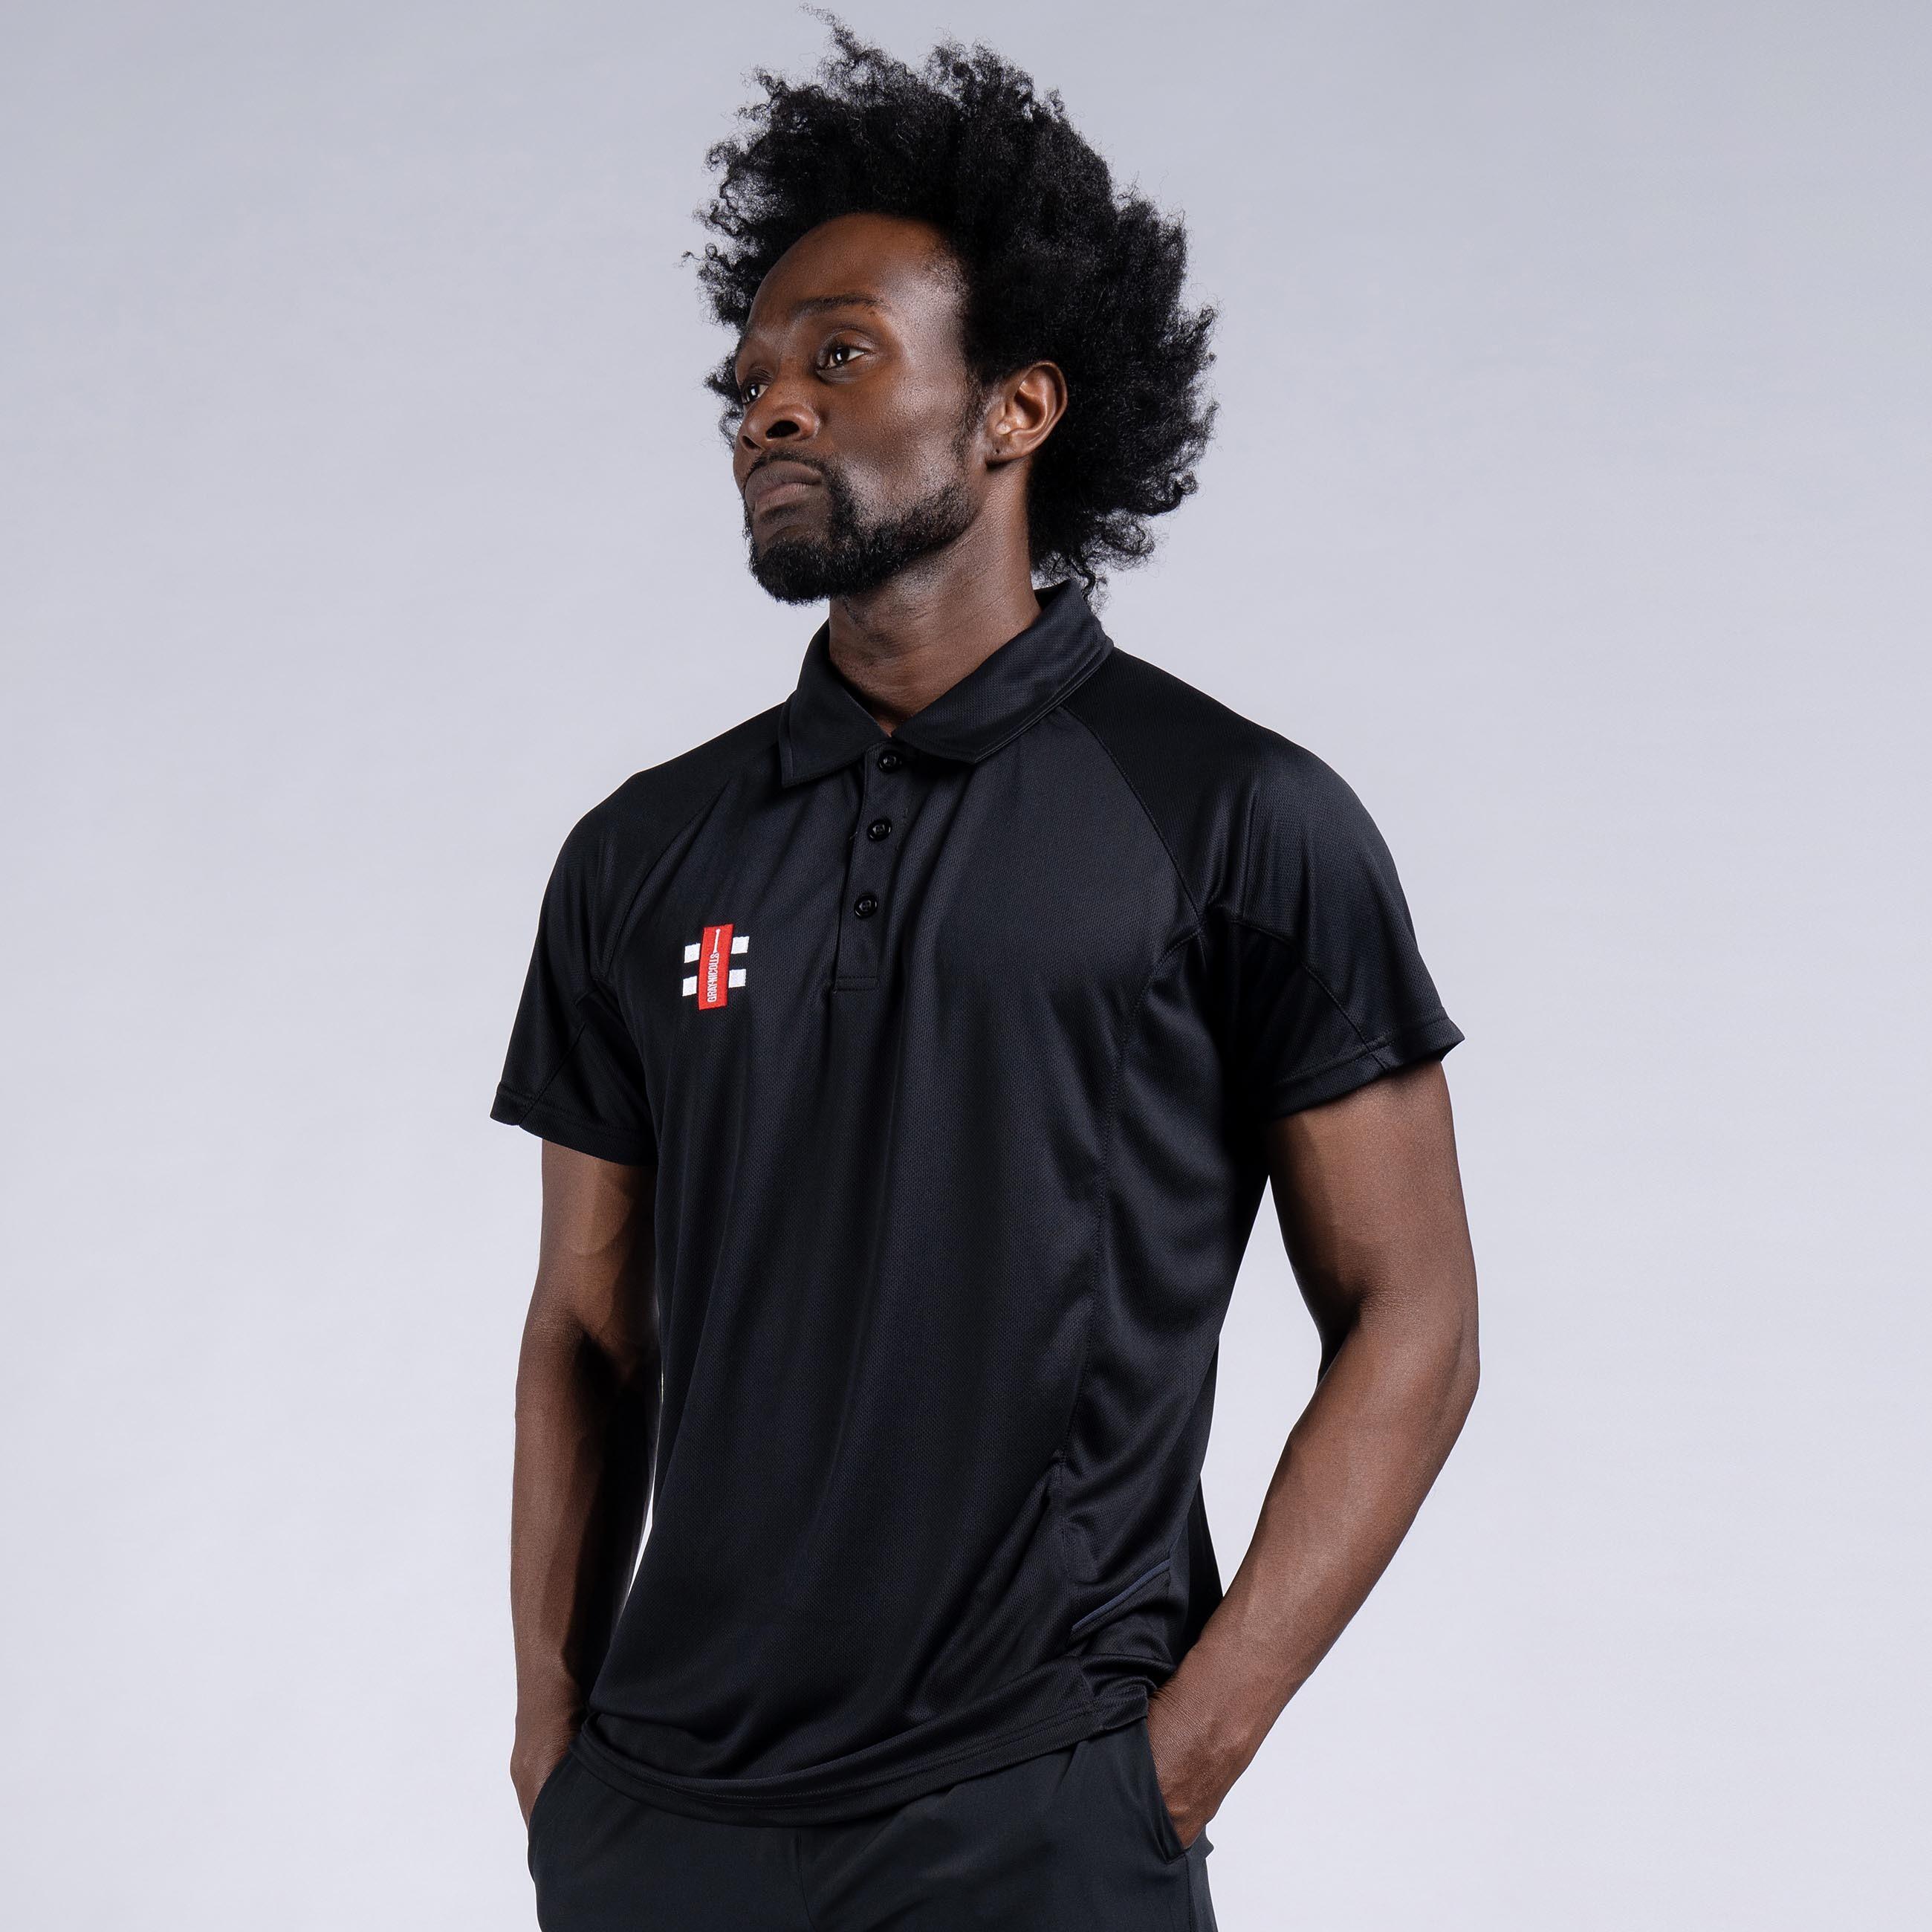 GRAY-NICOLLS Matrix Polo Shirt, Black